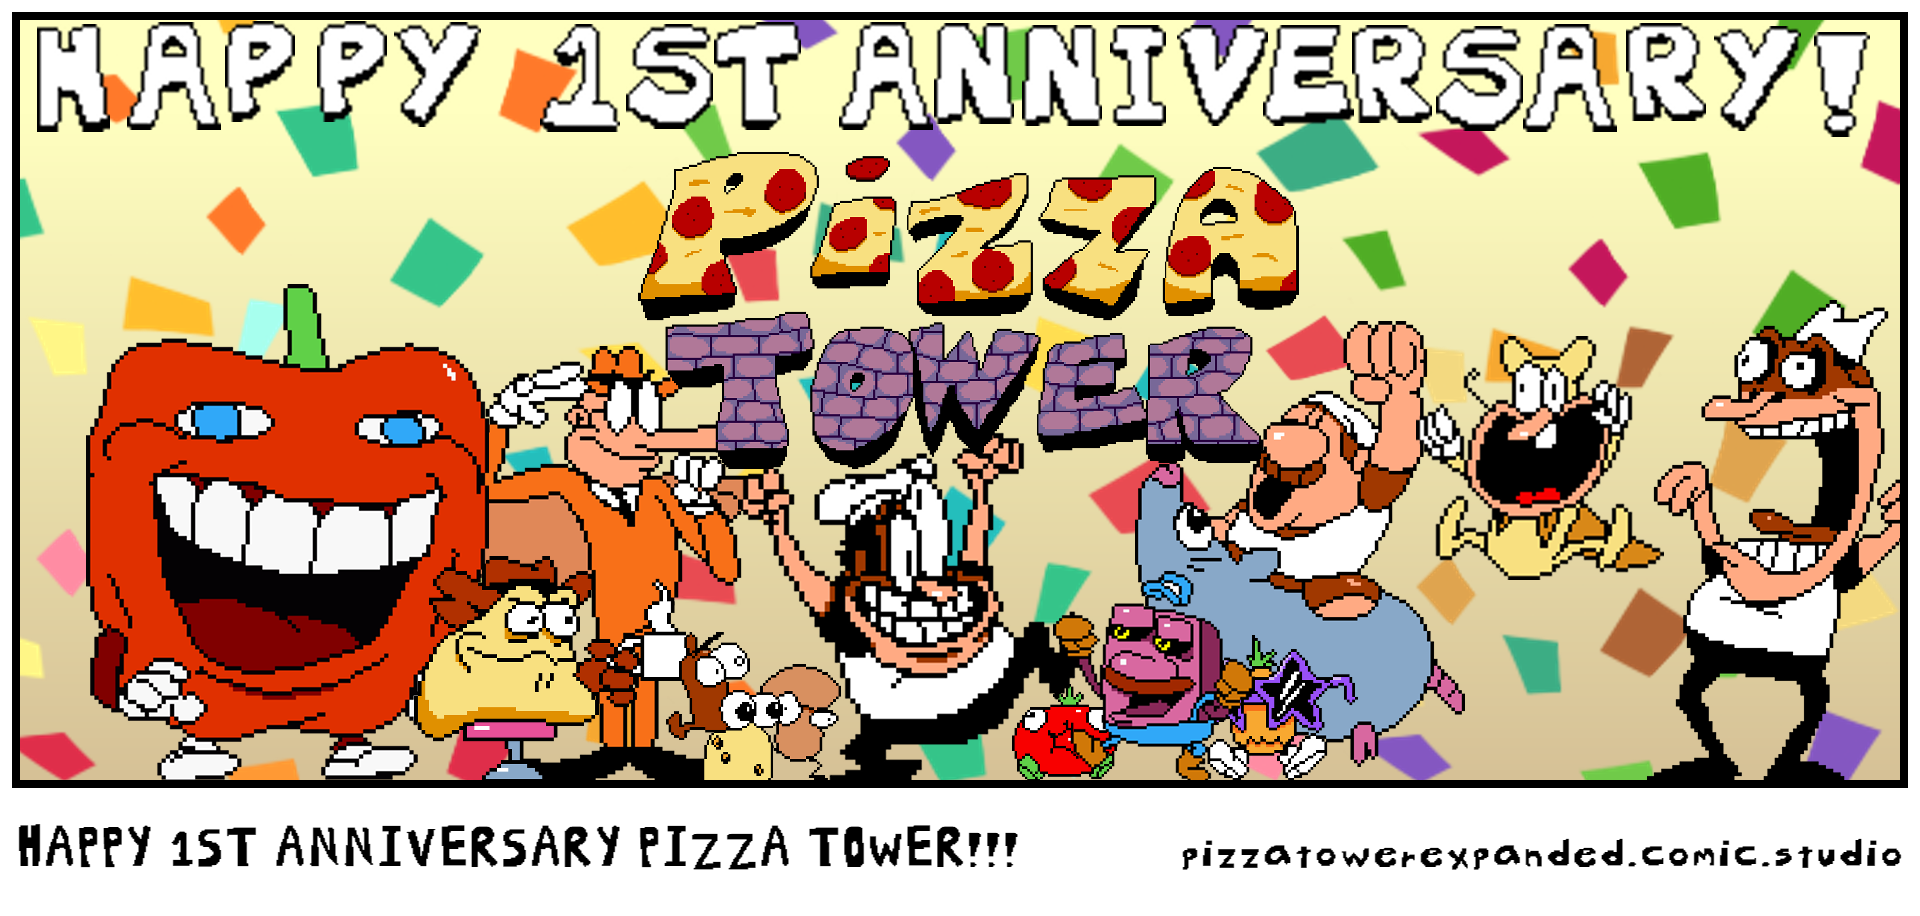 HAPPY 1ST ANNIVERSARY PIZZA TOWER!!!